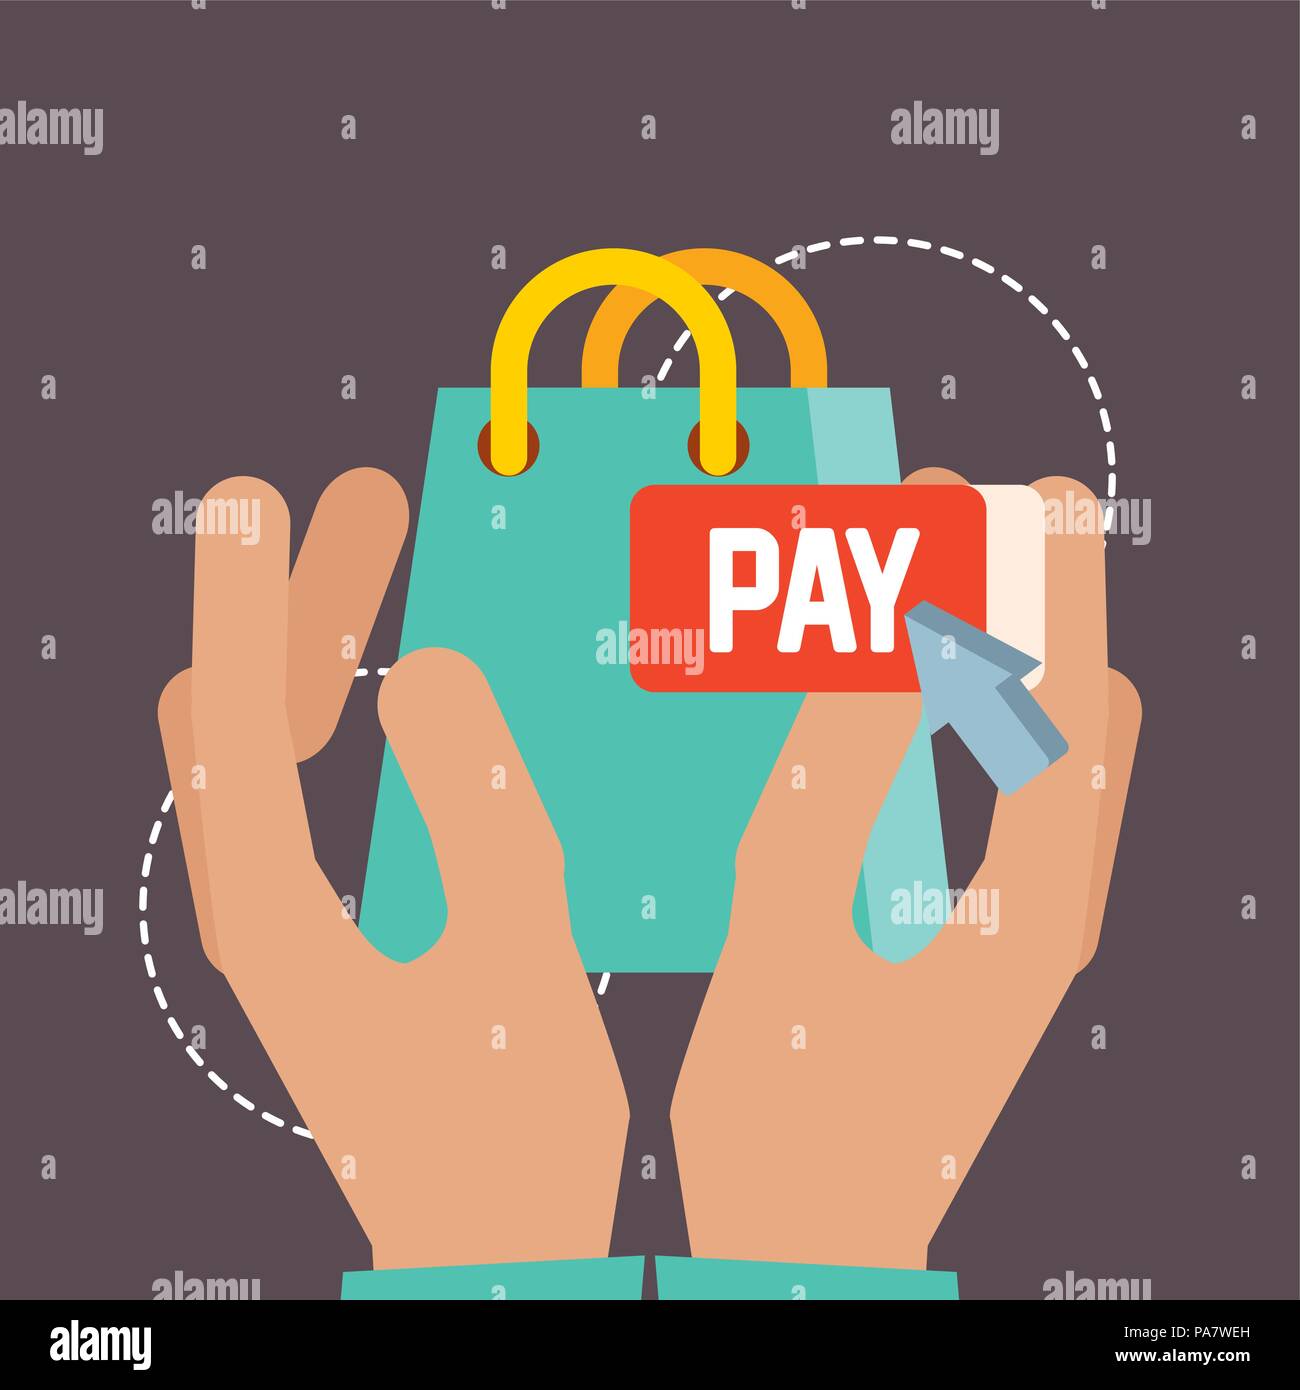 nfc payment technology hands holding handbag shopping vector illustration Stock Vector